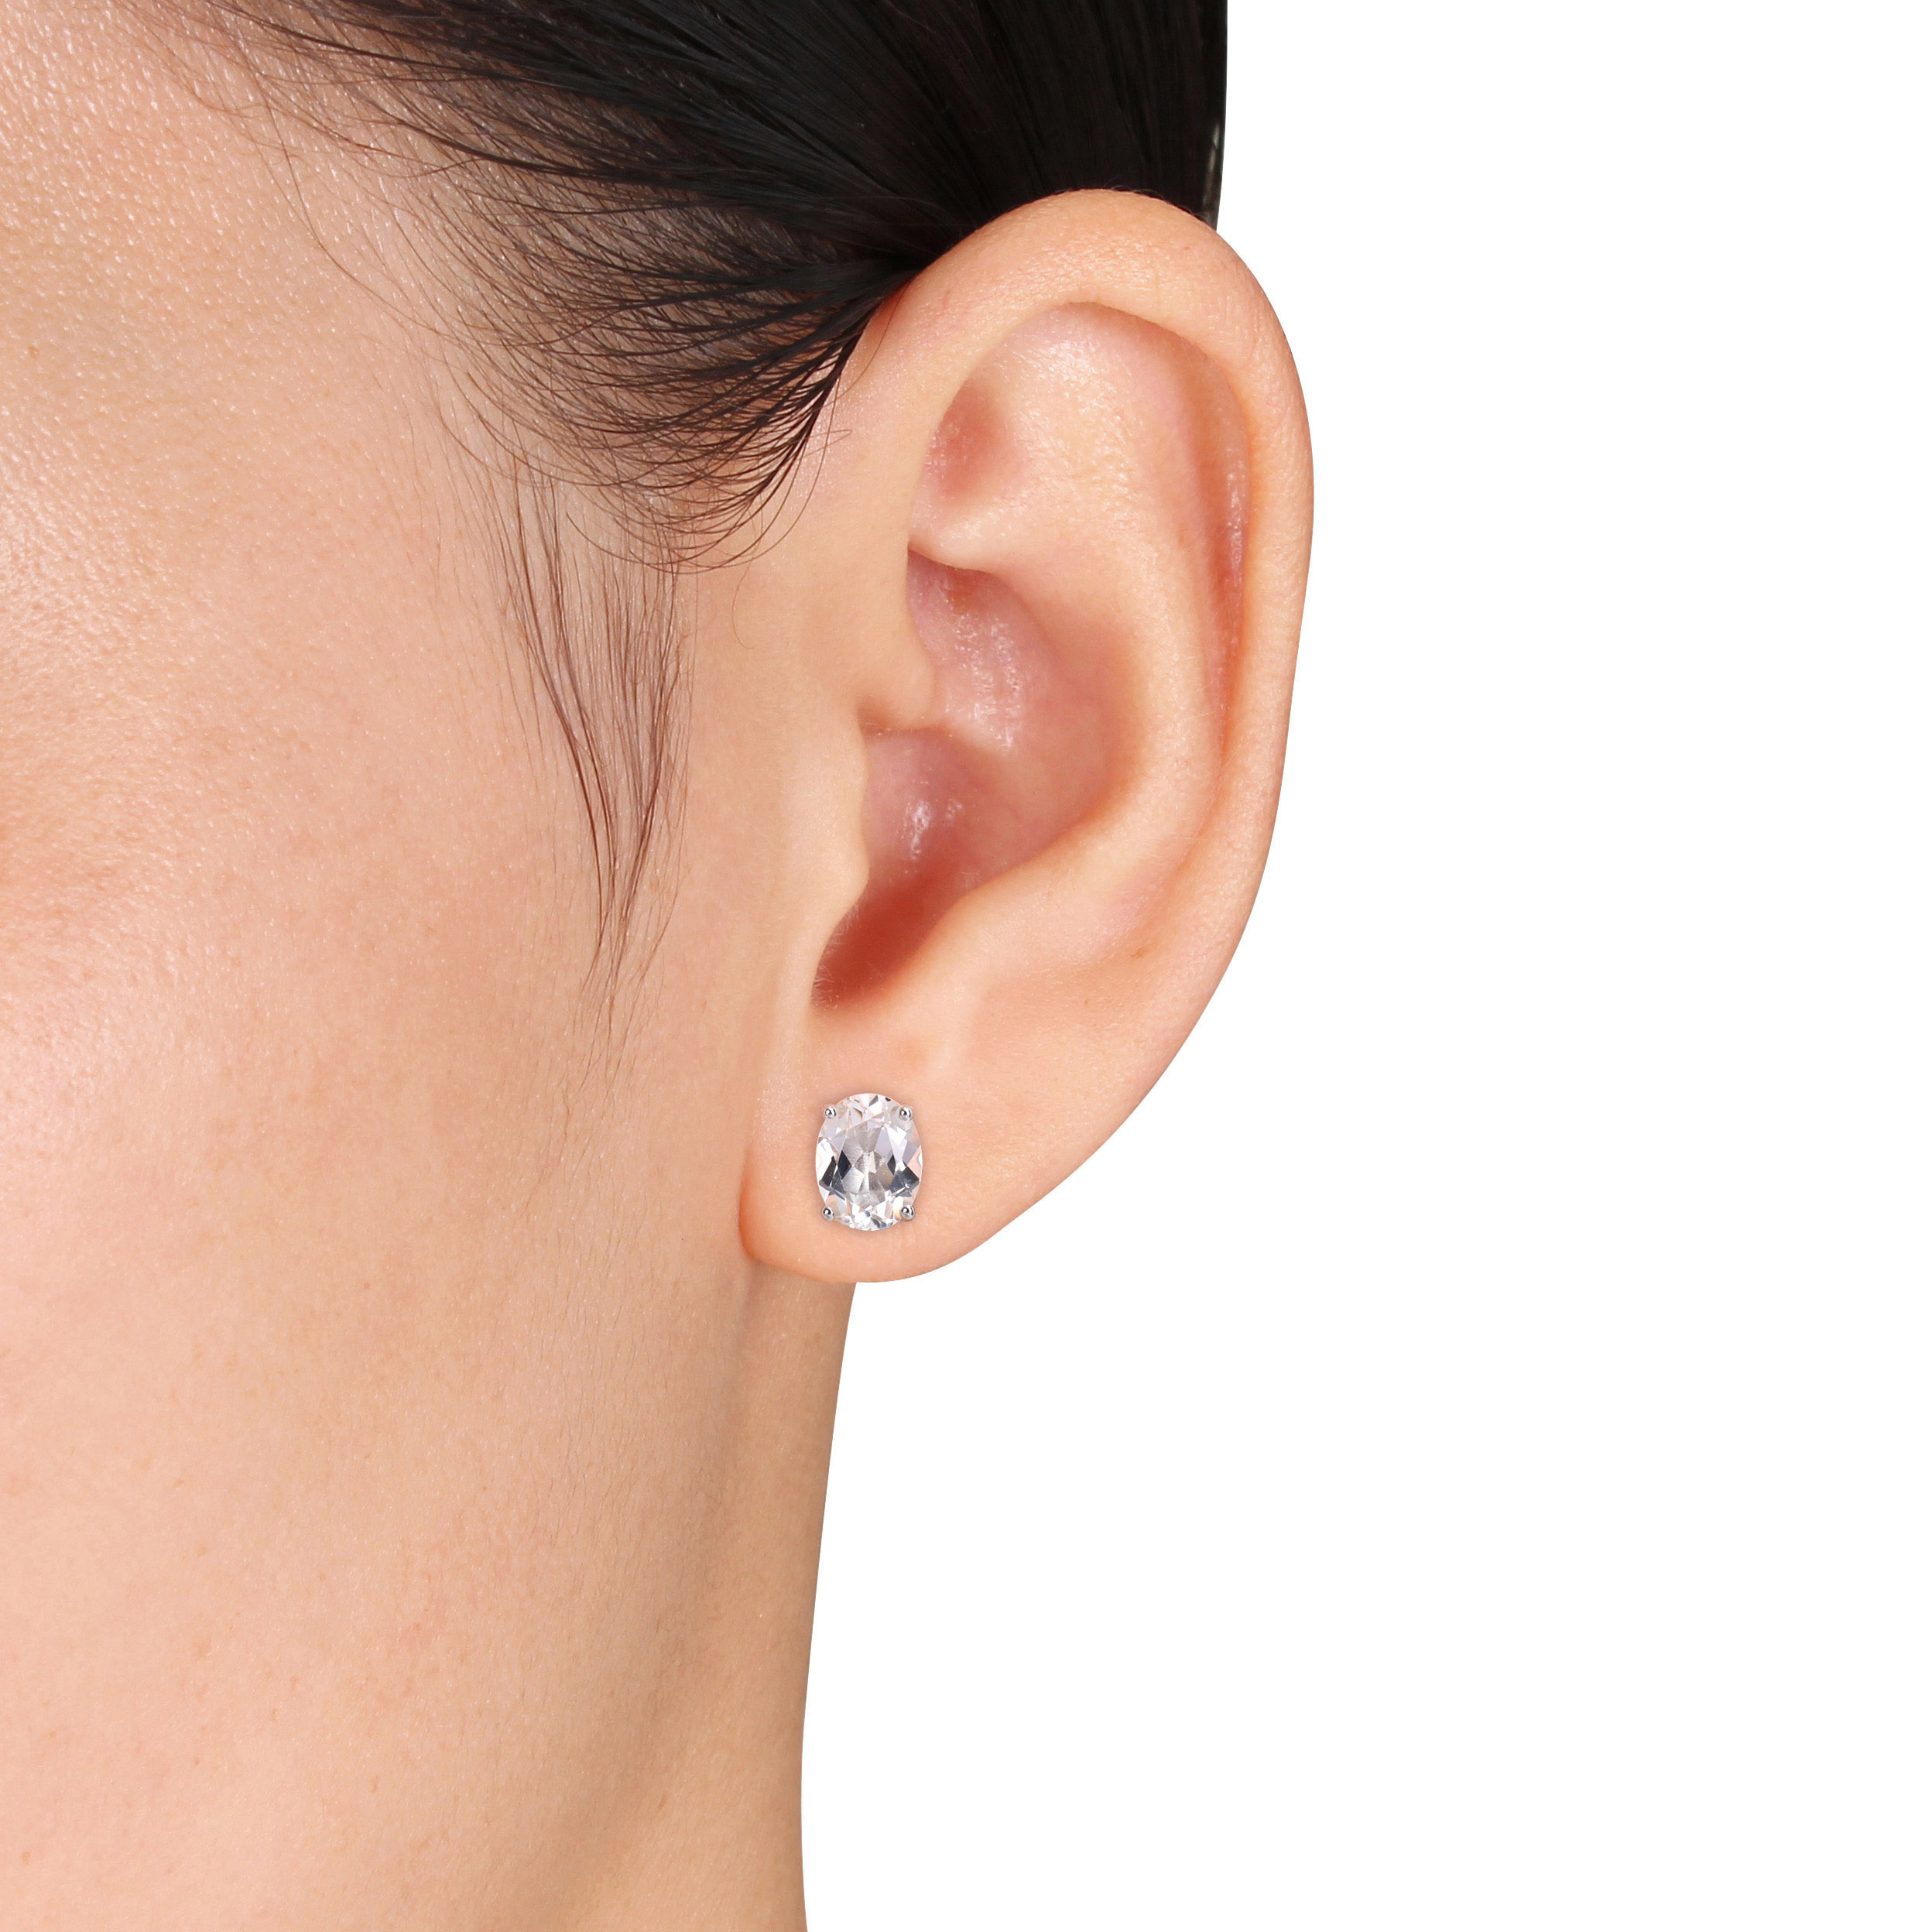 4 1/2 CT TGW Oval White Topaz Stud Earrings with Heart Design in Sterling Silver